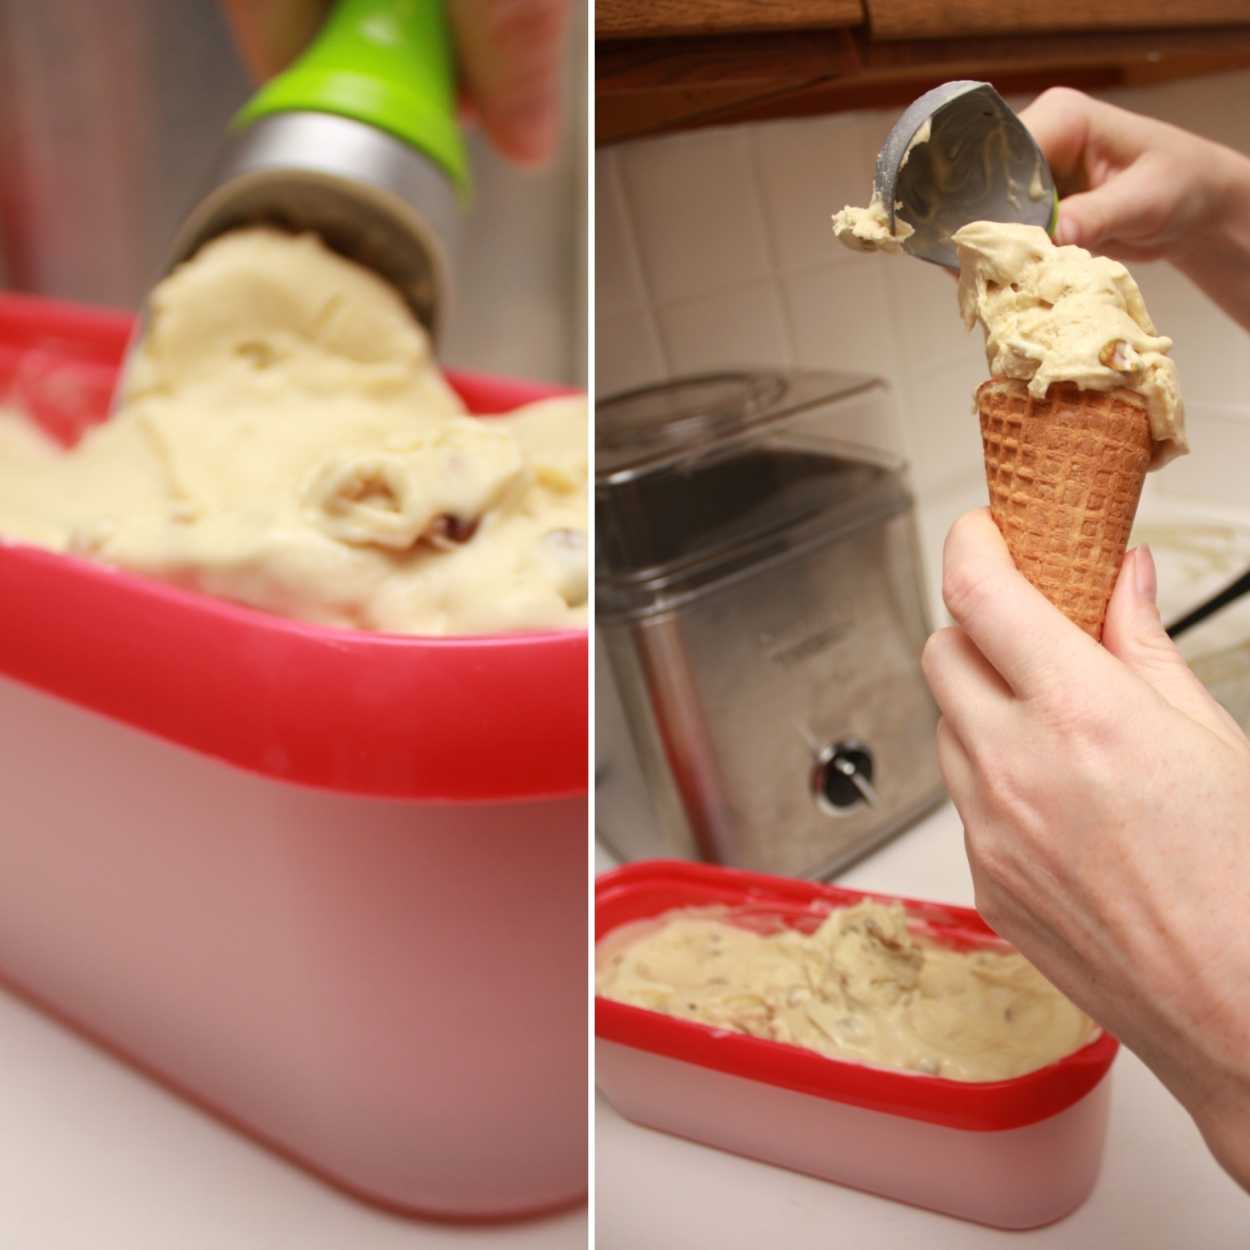 Tovolo Ice Cream Tub- Pistachio